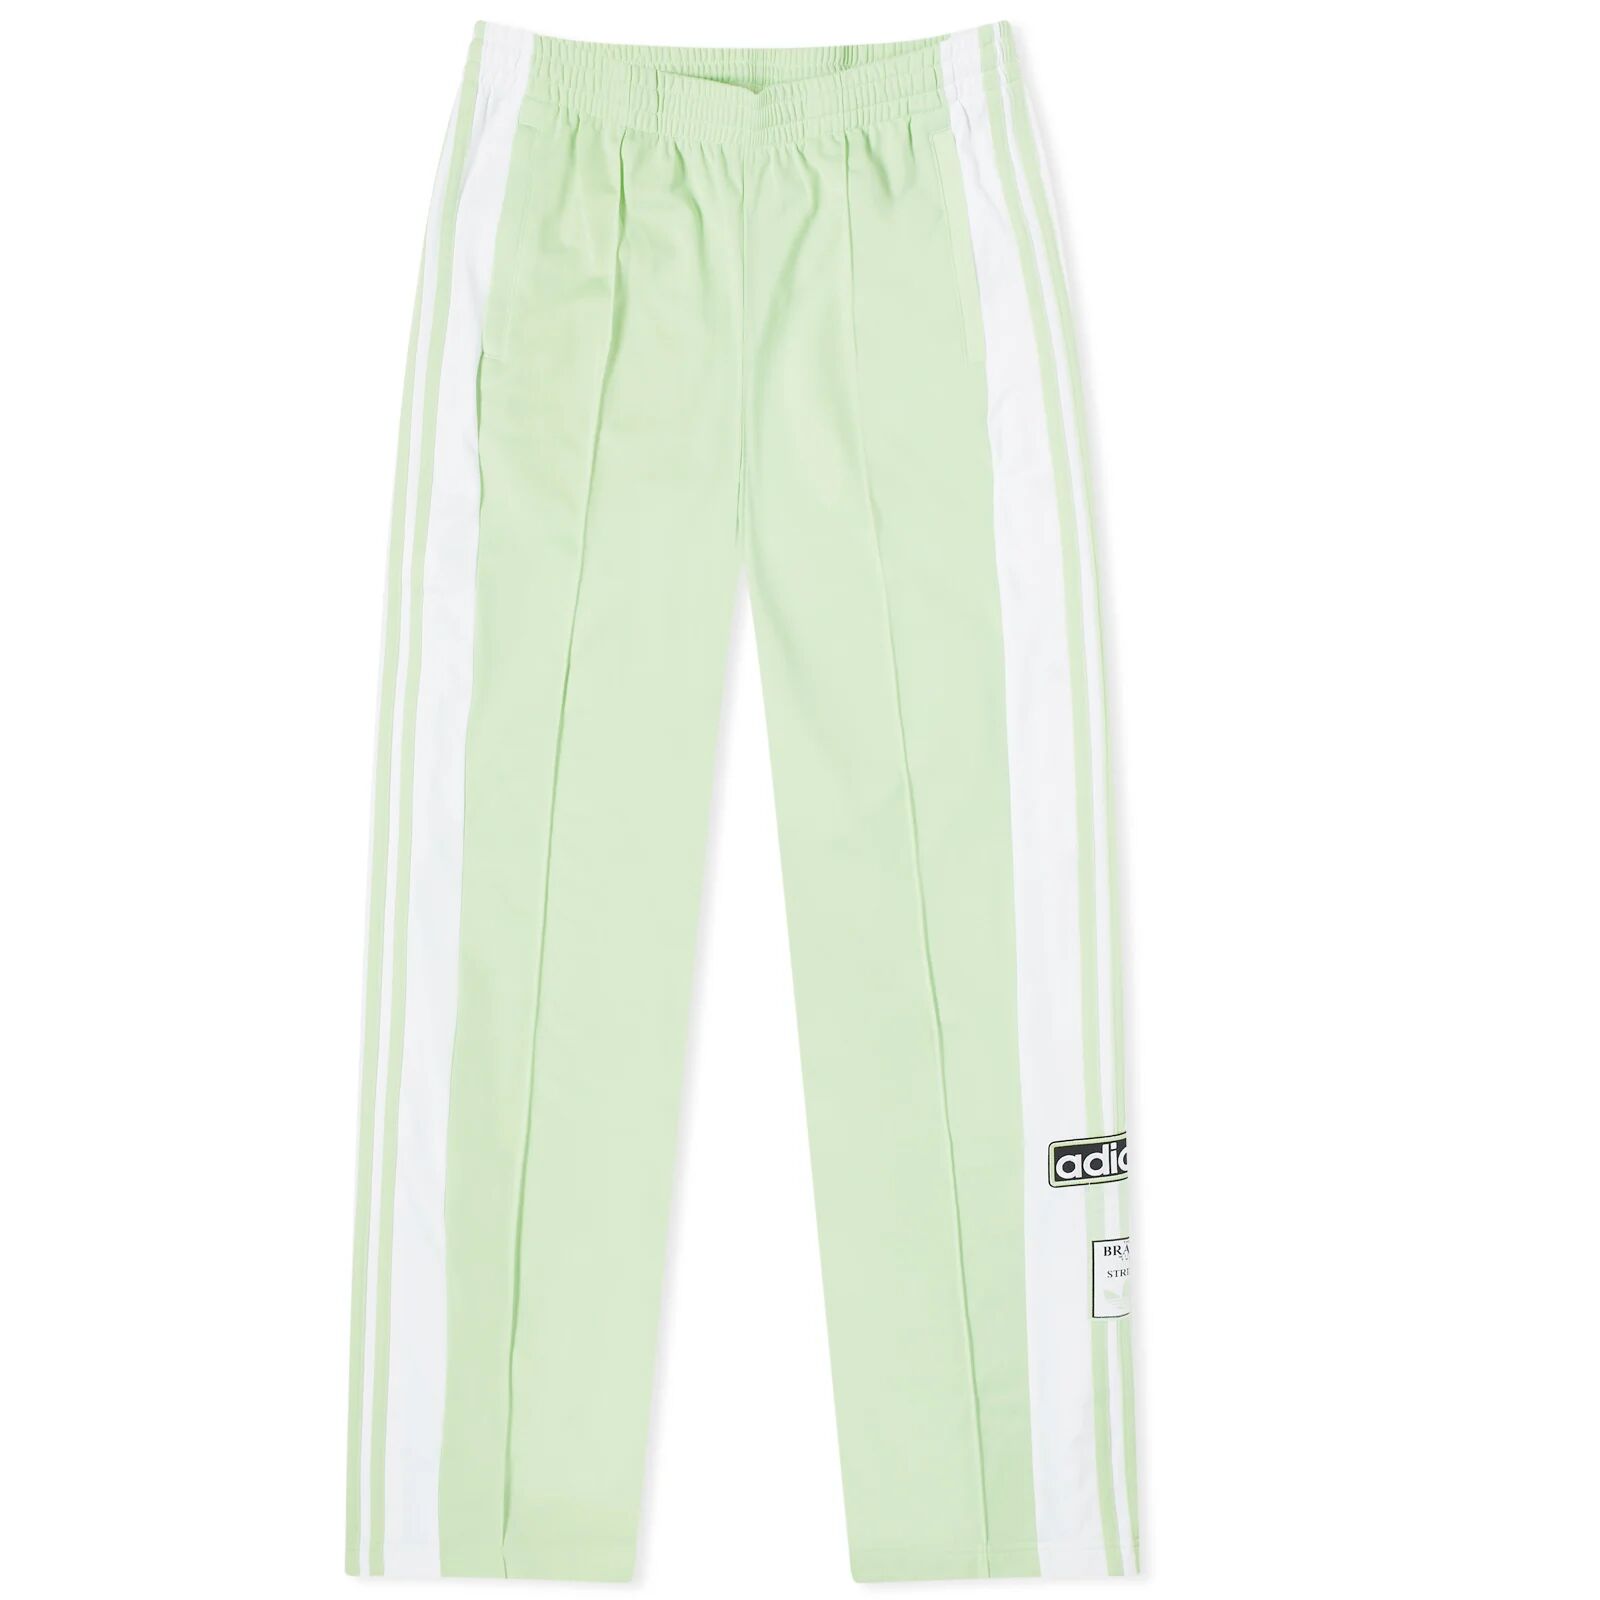 Adidas Women's Adibreak Pant in Semi Green Spark, Size X-Large